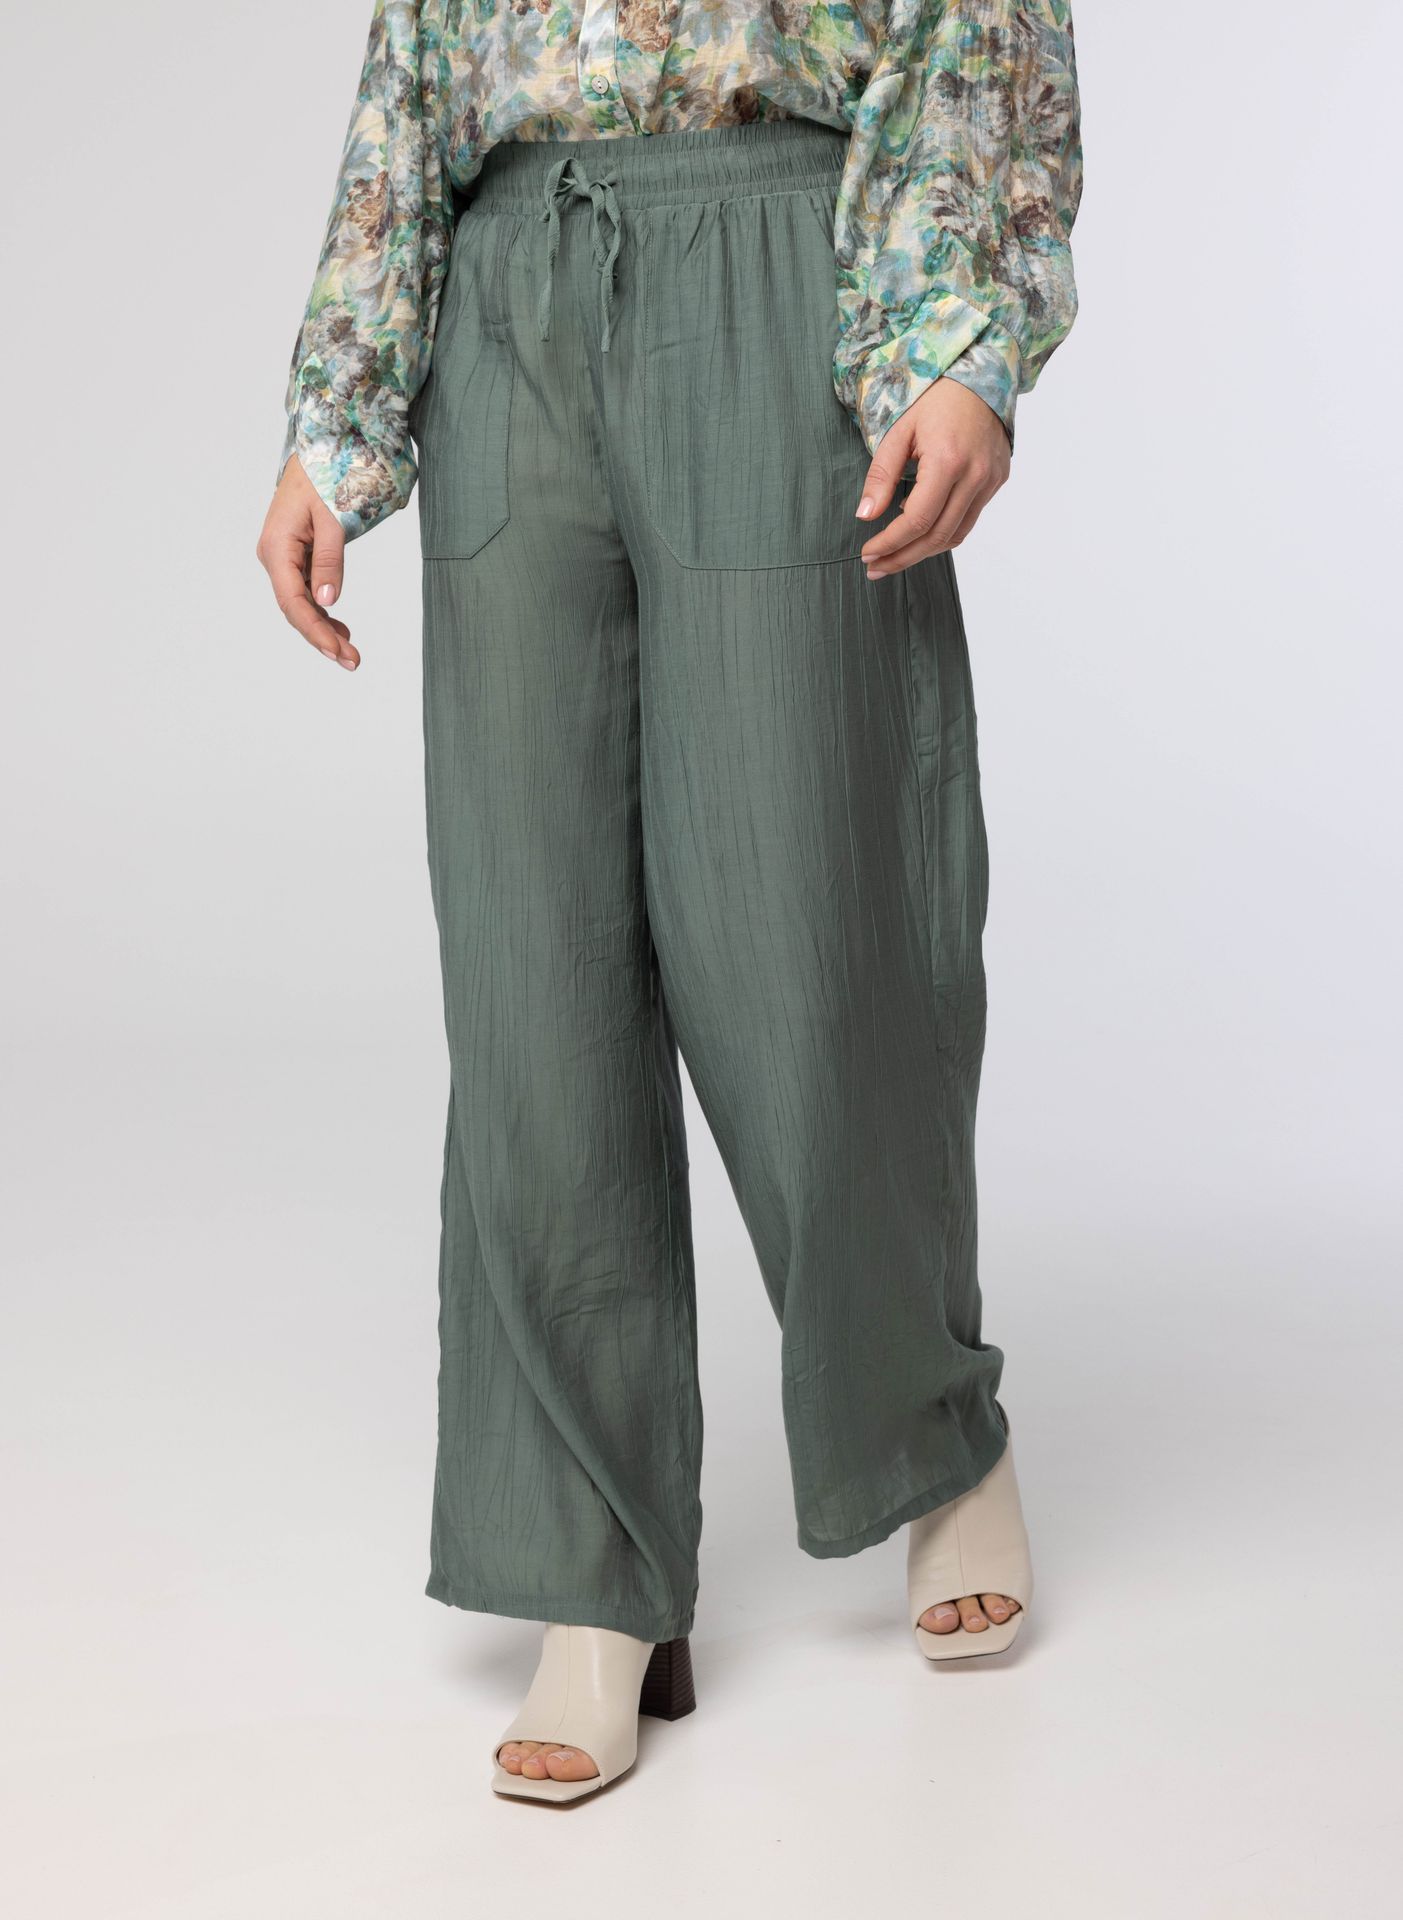 Norah Groene pantalon grey green 213895-053